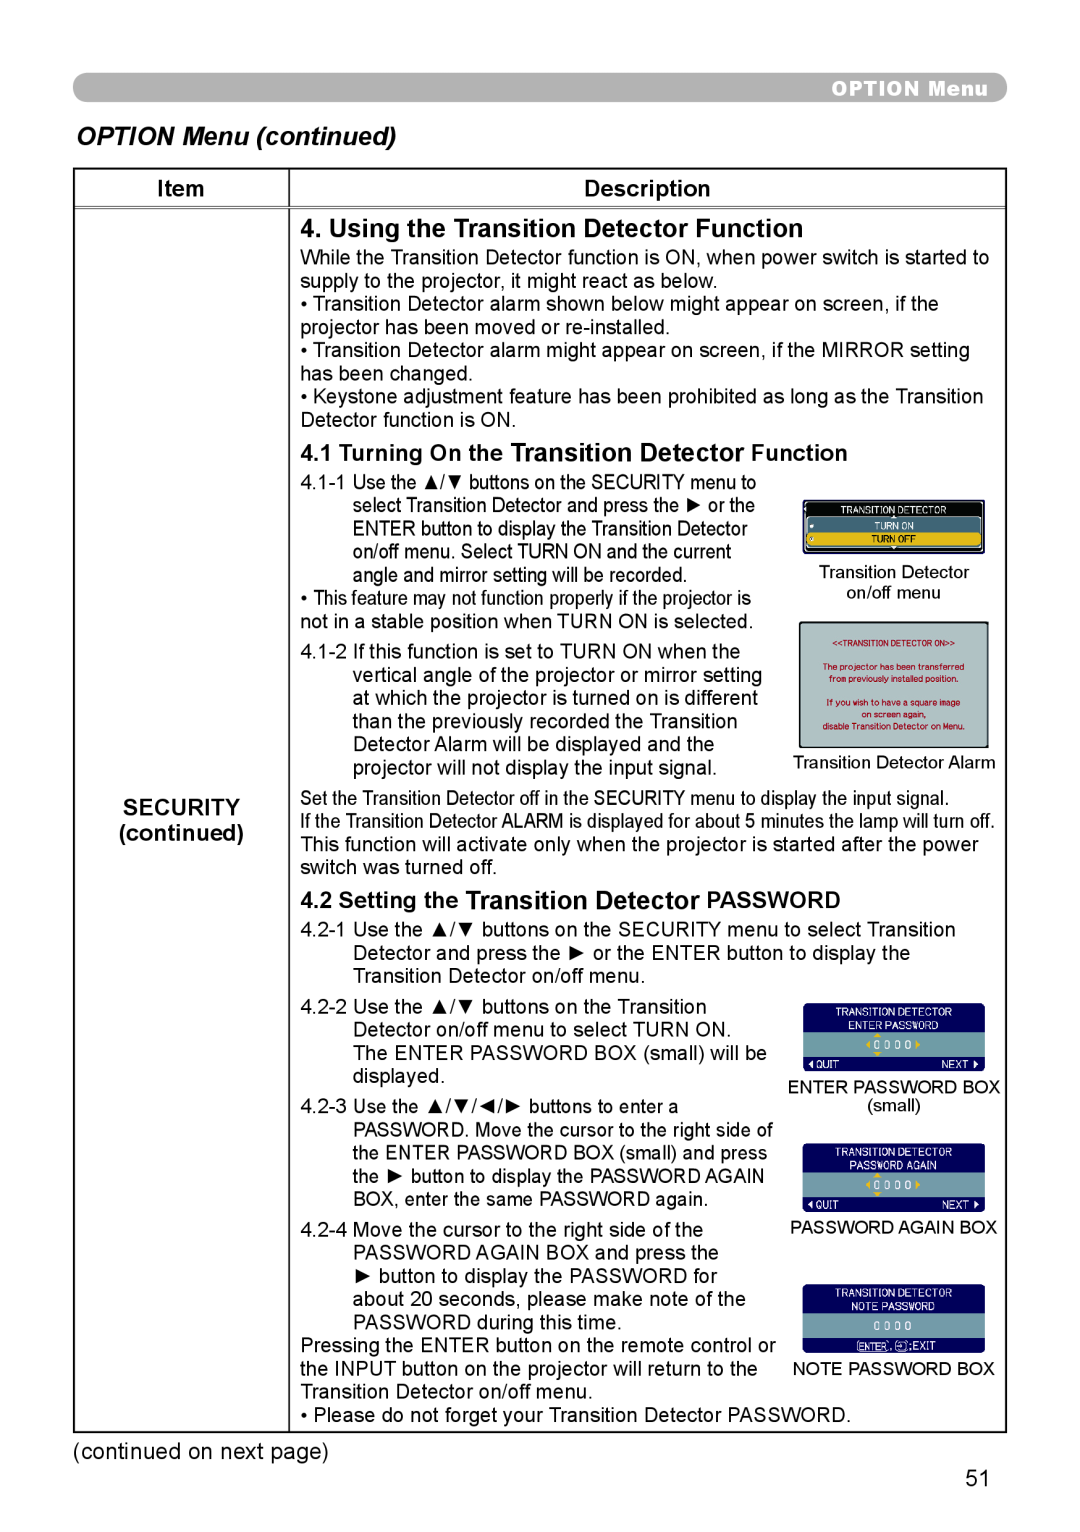 Planar PR9020 user manual Using the Transition Detector Function, OPTION Menu continued, Description, SECURITY continued 